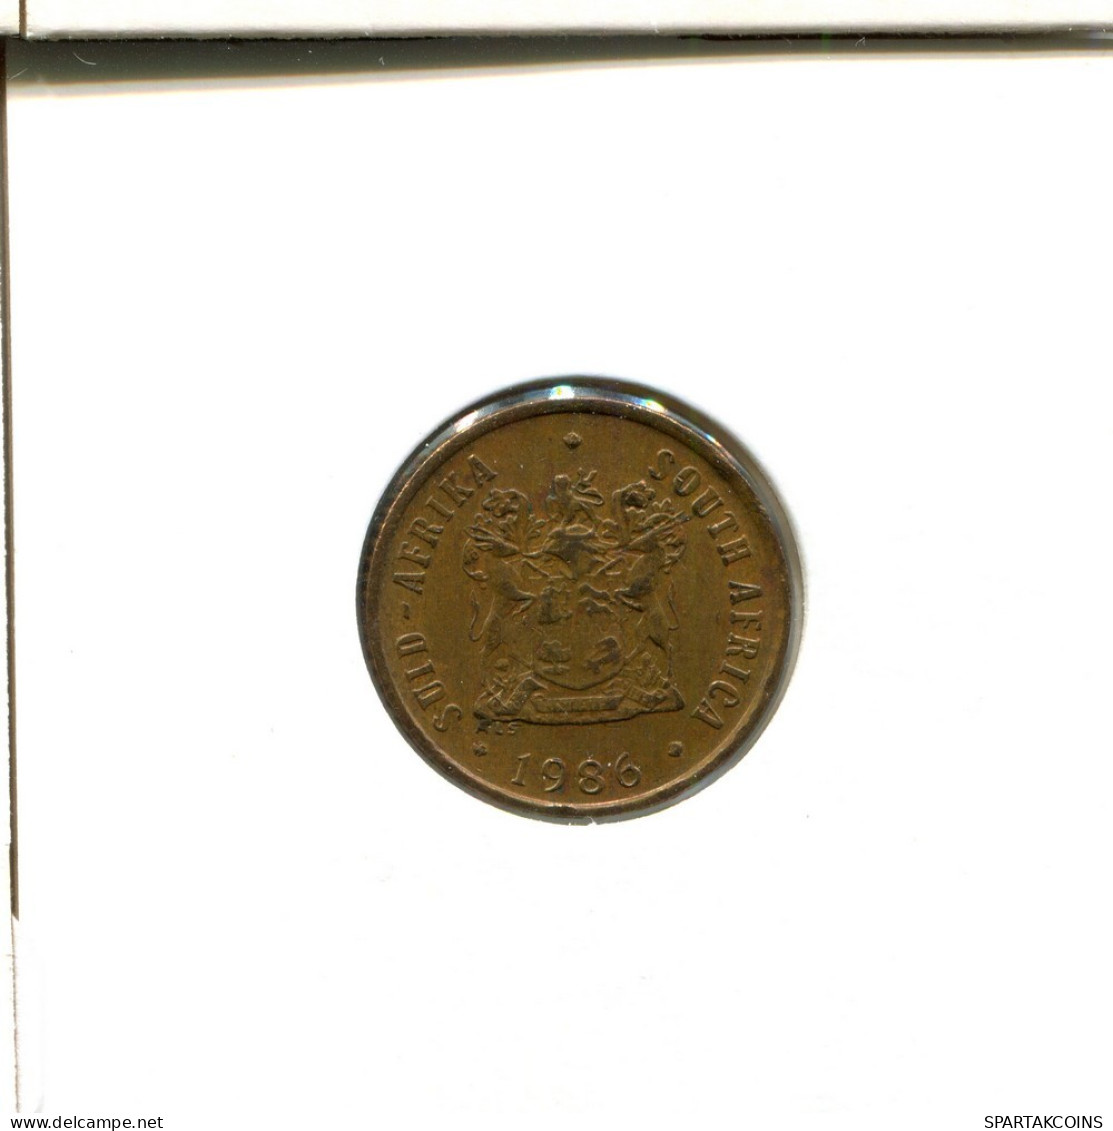 1 CENT 1986 SOUTH AFRICA Coin #AT087.U.A - Südafrika